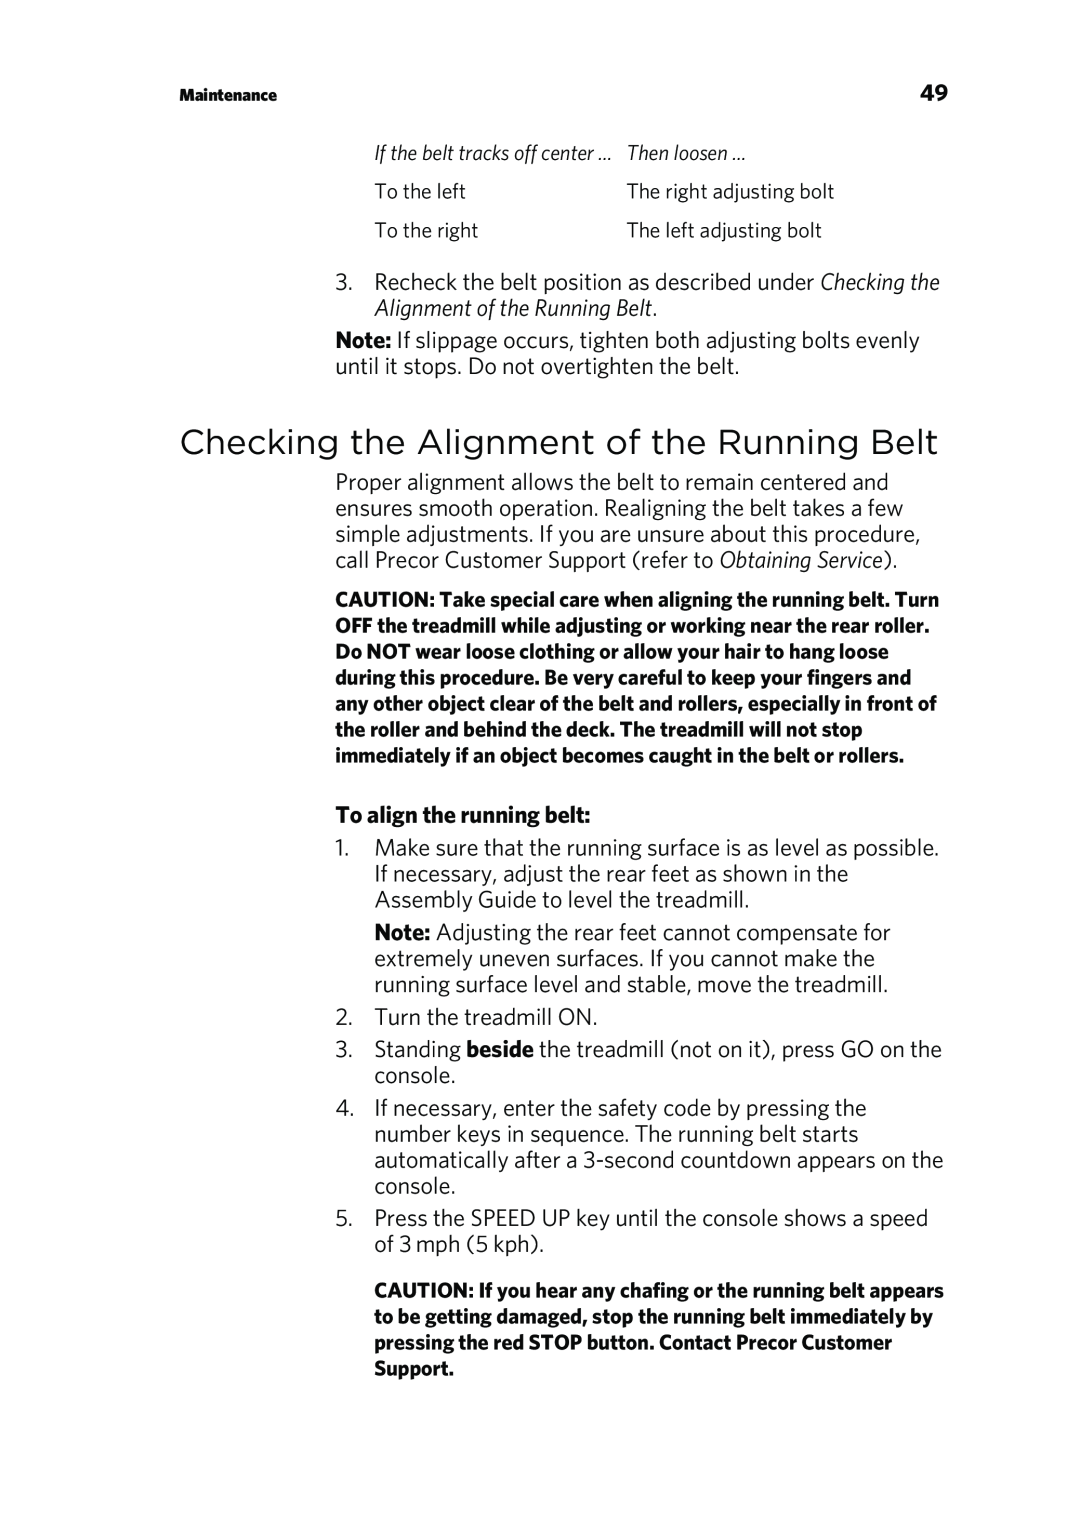 Precor P80 manual Checking the Alignment of the Running Belt, To align the running belt 